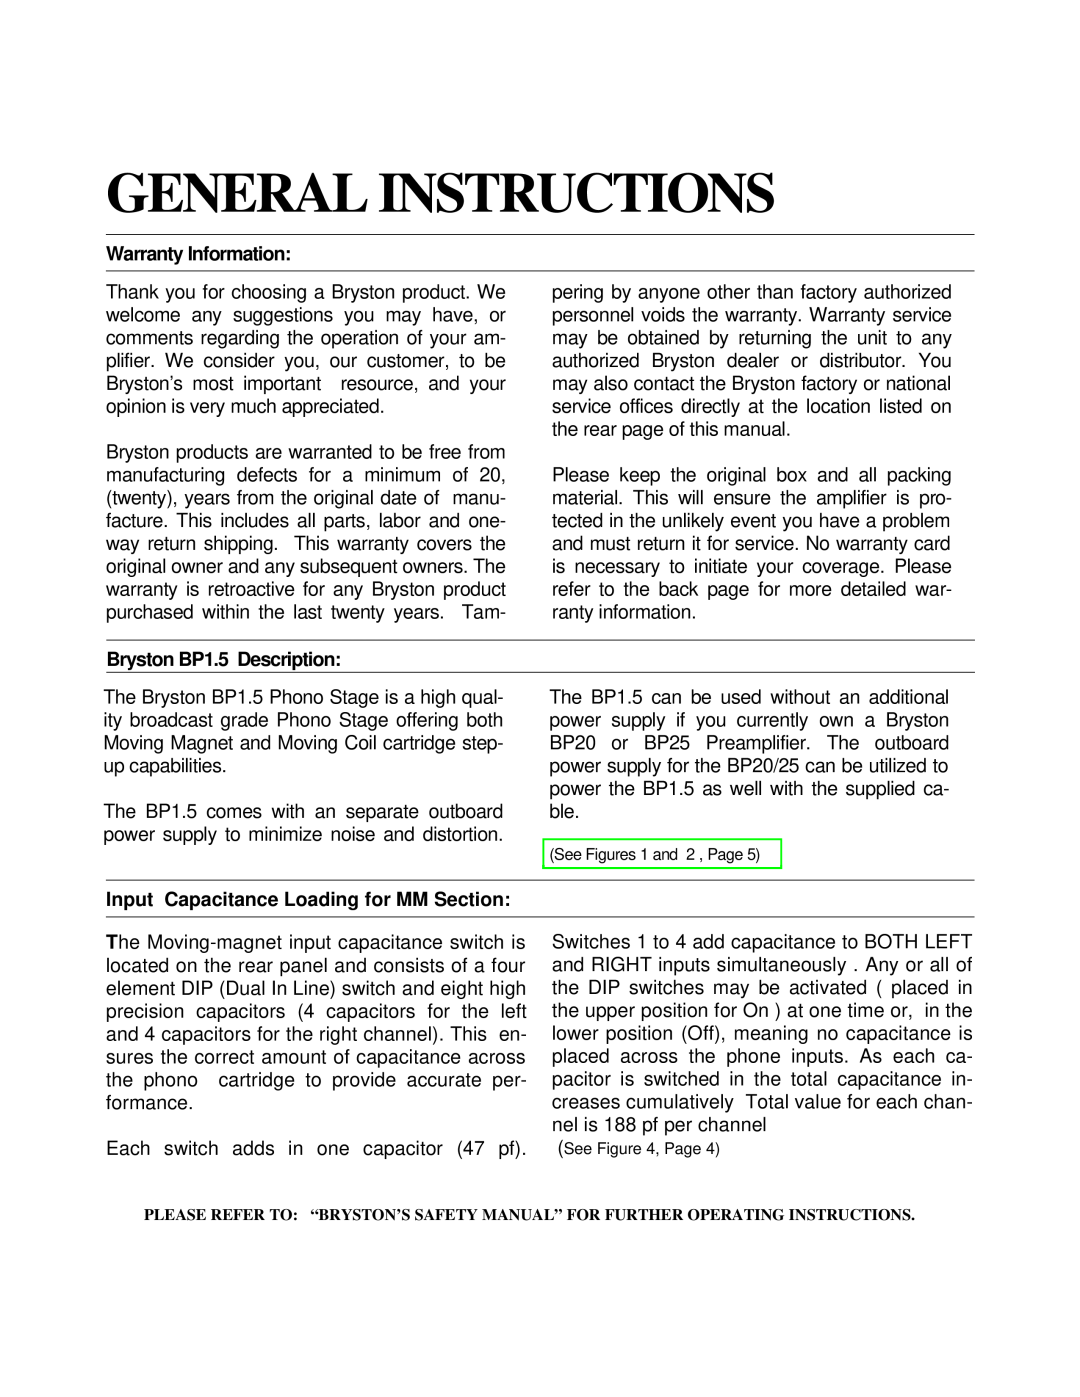 Bryston BP 1.5 owner manual General Instructions, Warranty Information, Bryston BP1.5 Description 